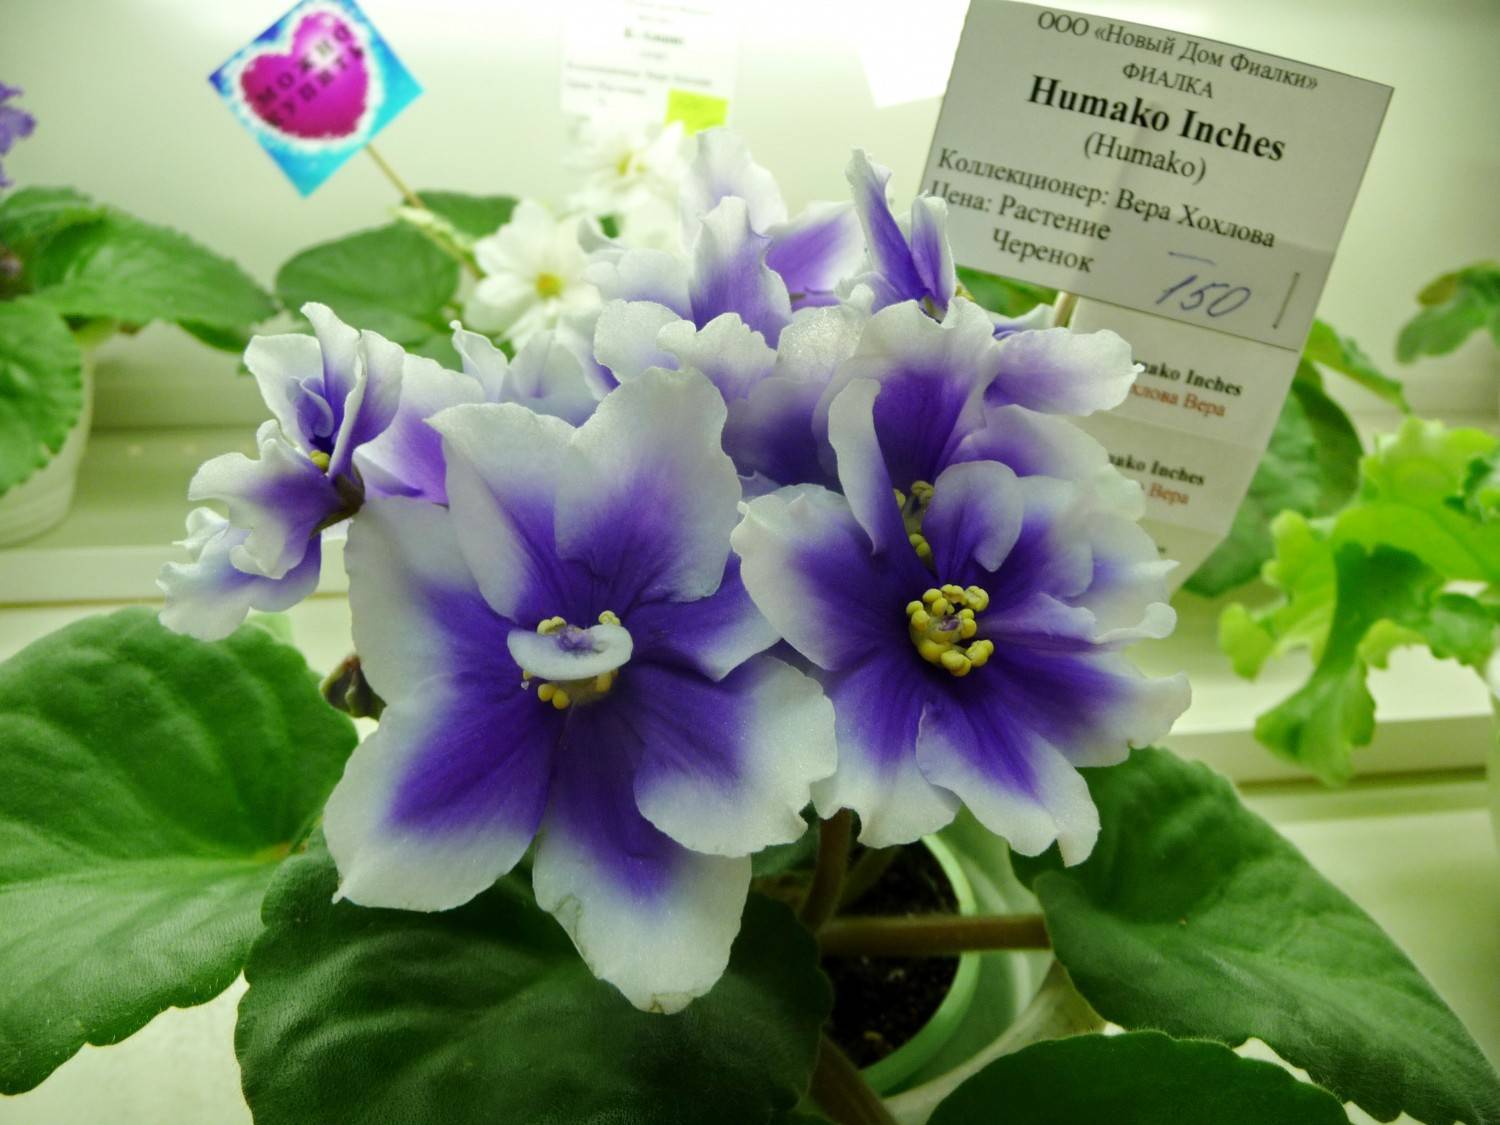 Фиалка Humako inches — особенности растения